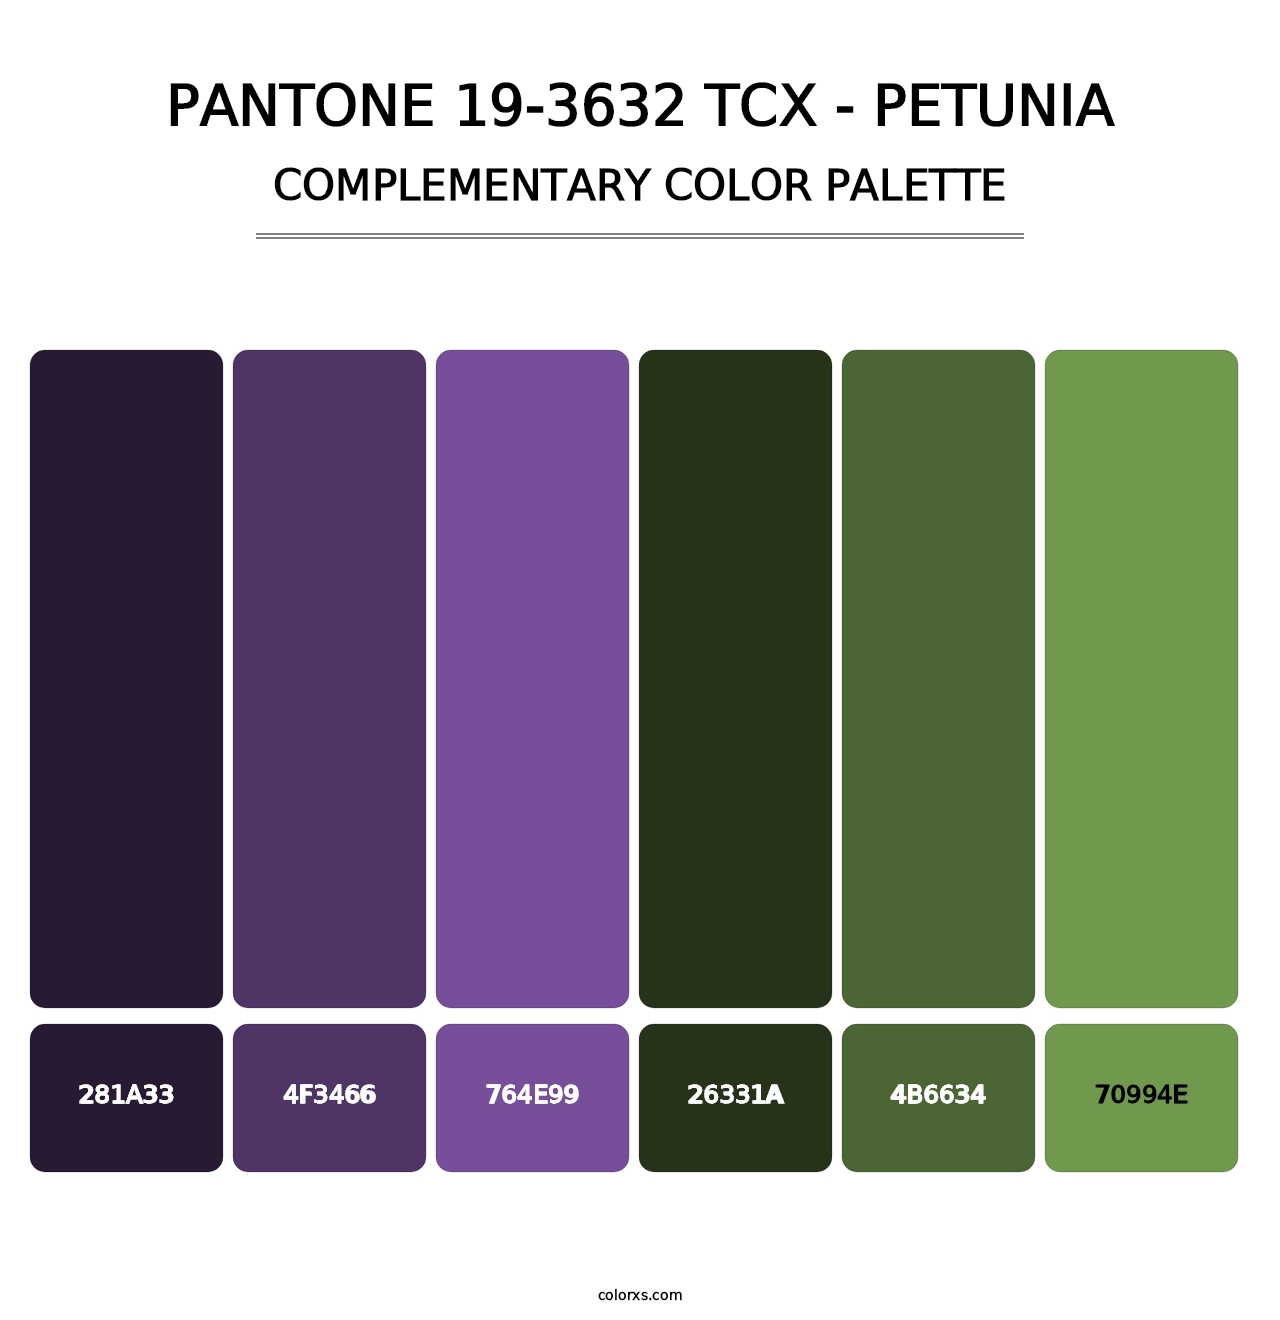 PANTONE 19-3632 TCX - Petunia - Complementary Color Palette